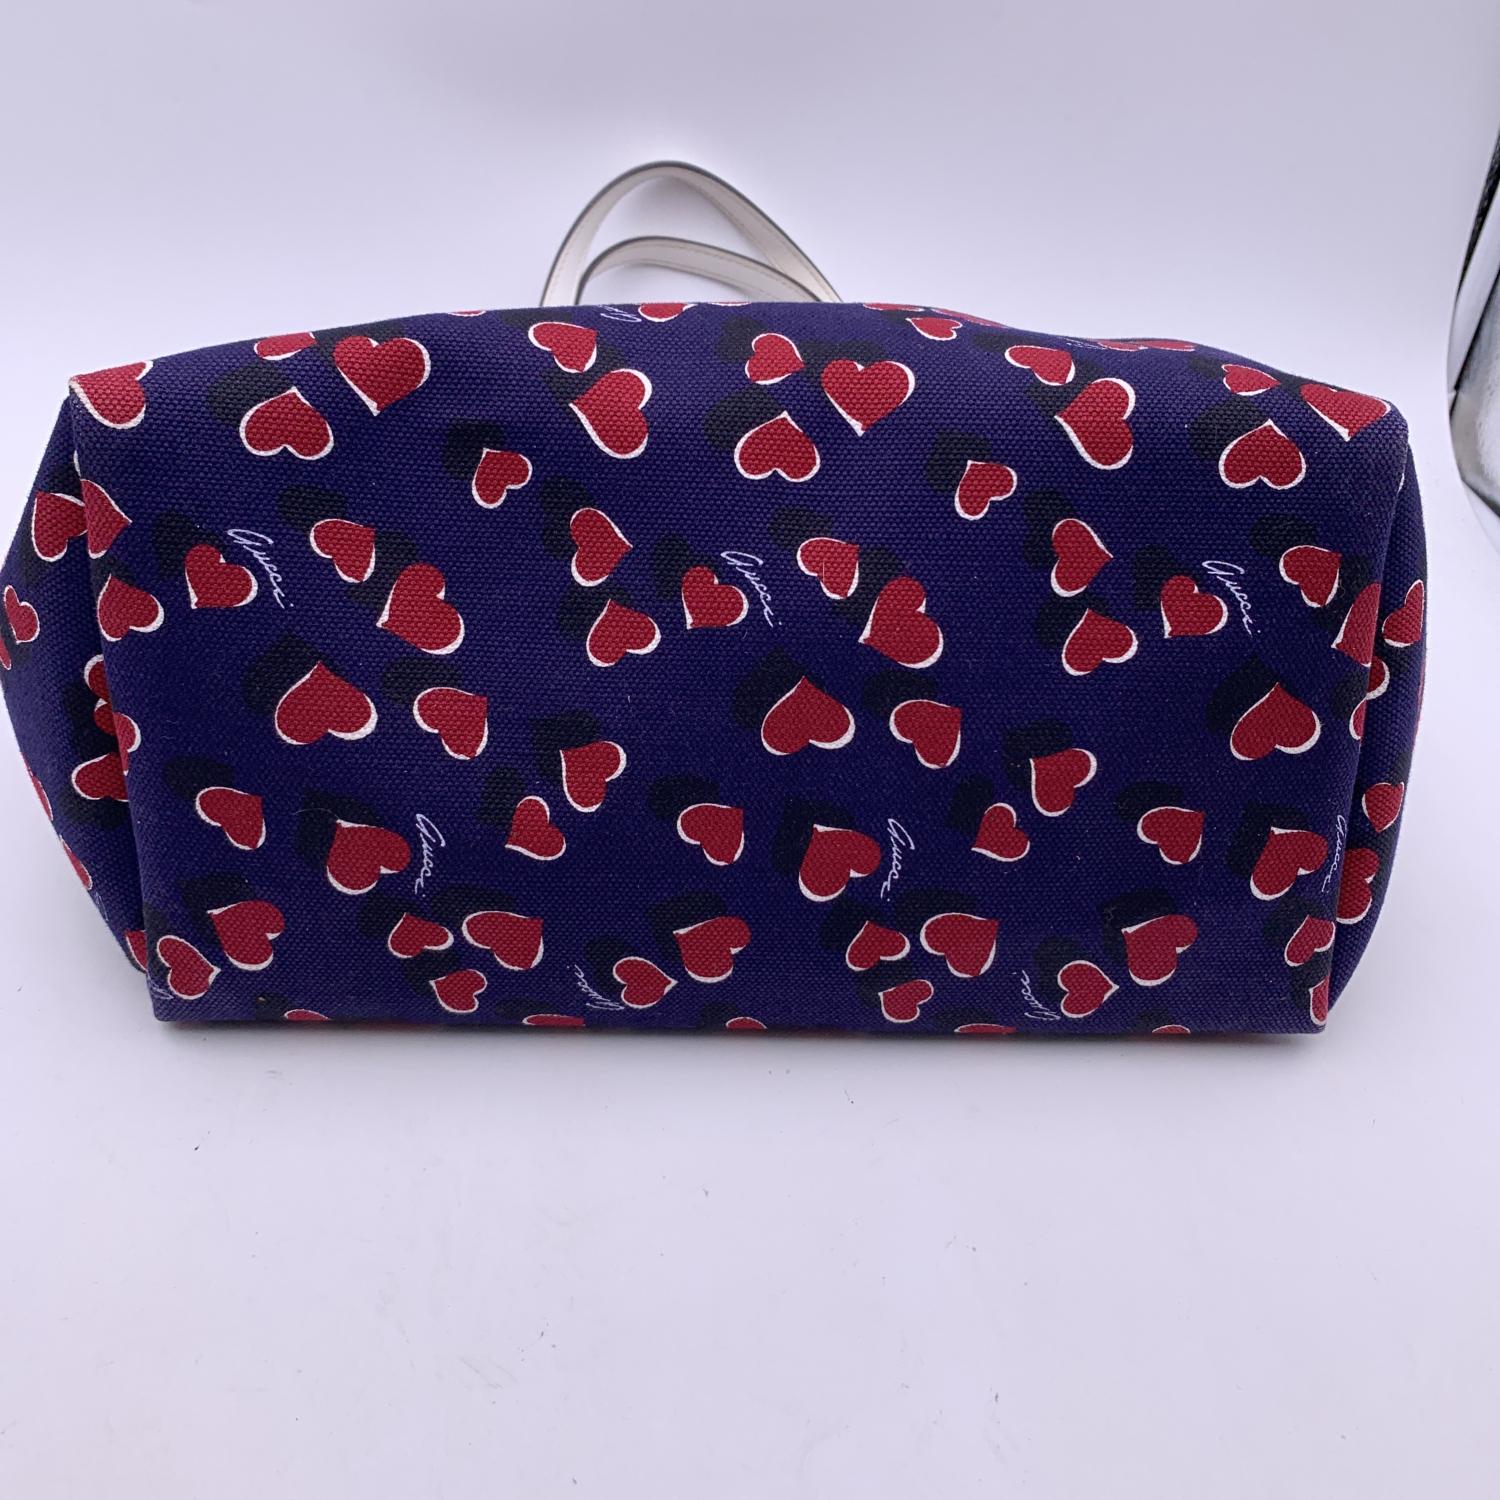 Gucci Blue Canvas Heartbeat Print Tote Shopping Bag Handbag 4